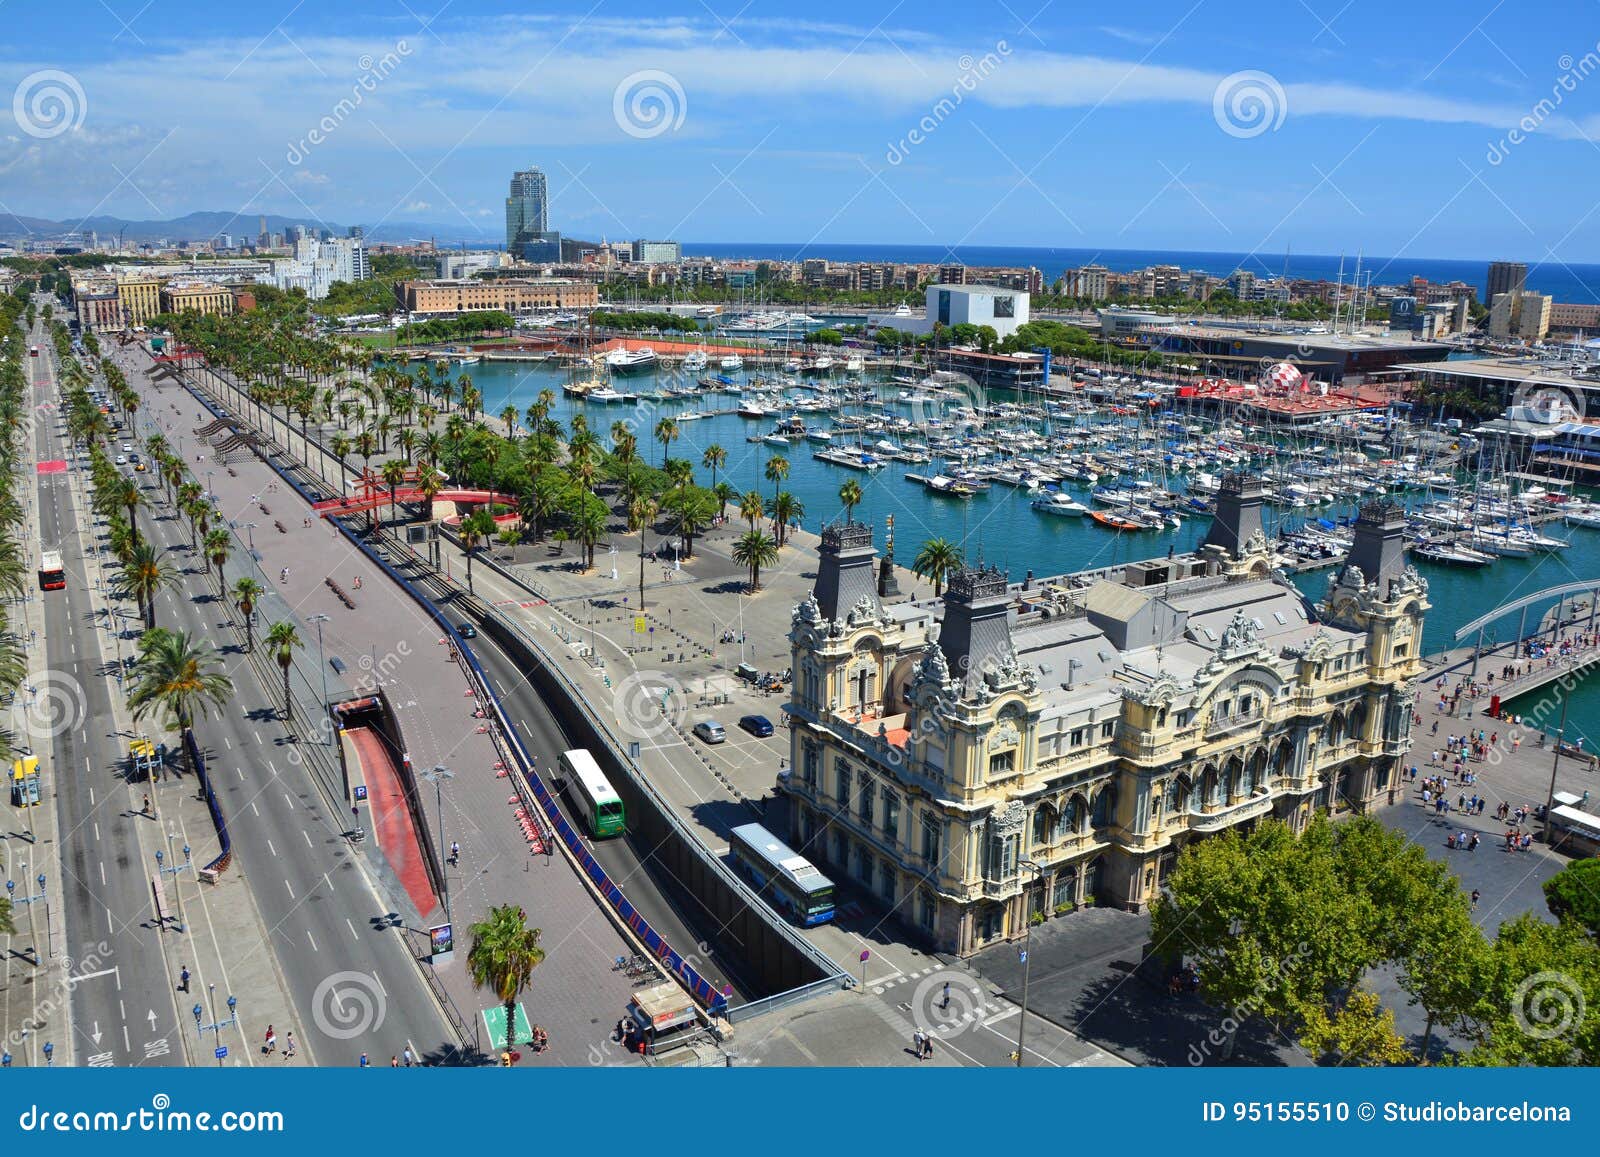 Barcelona marina top view editorial image. Image of boulevard - 95155510